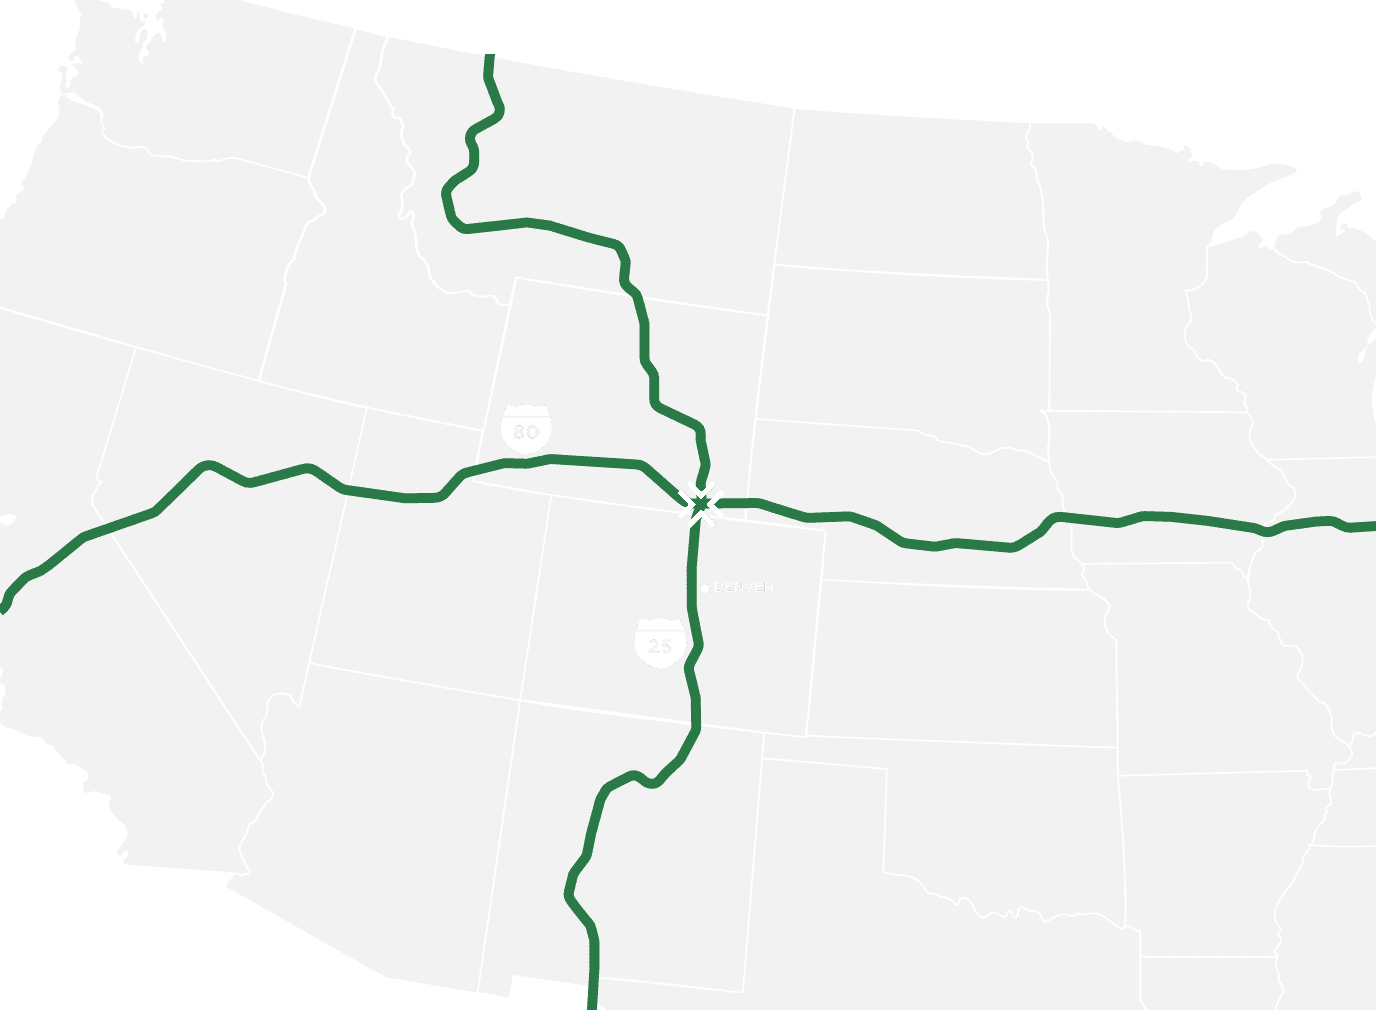 Cheyenne Logistics Hub's proximity to major interstates